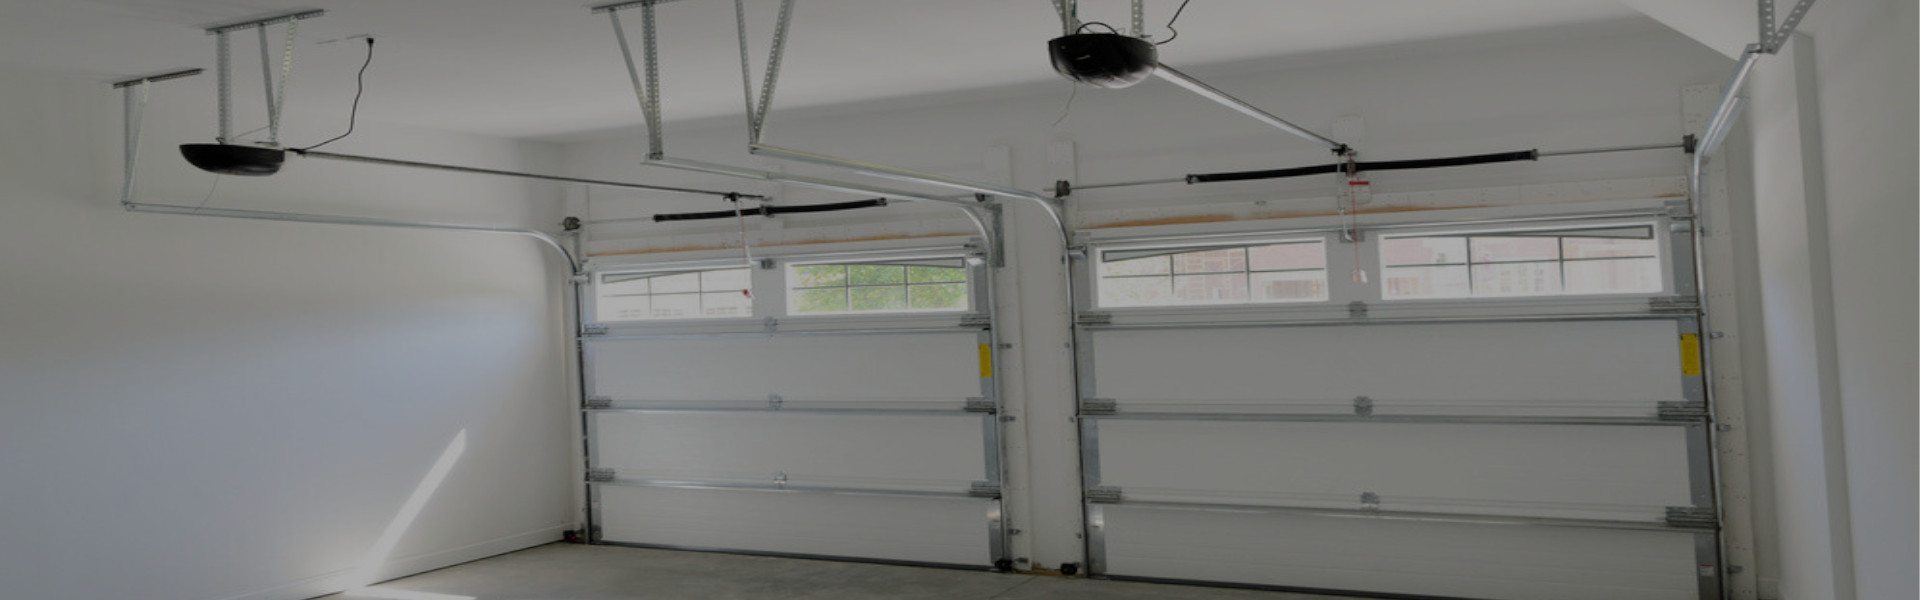 Slider Garage Door Repair, Glaziers in West Drayton, Harmondsworth, Sipson, UB7